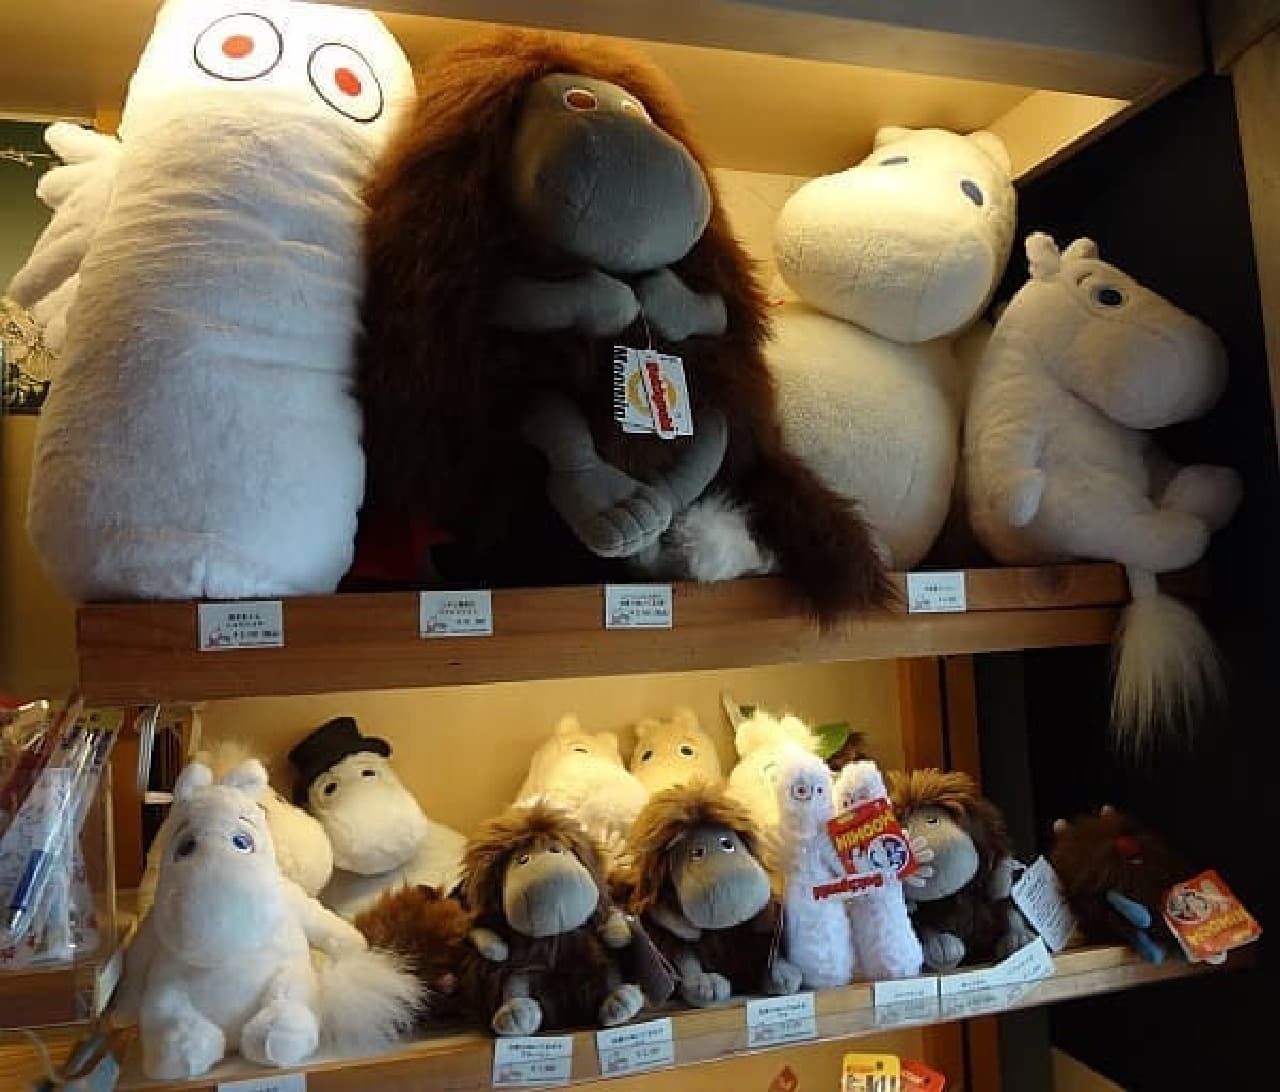 I want a Moomin stuffed animal ...